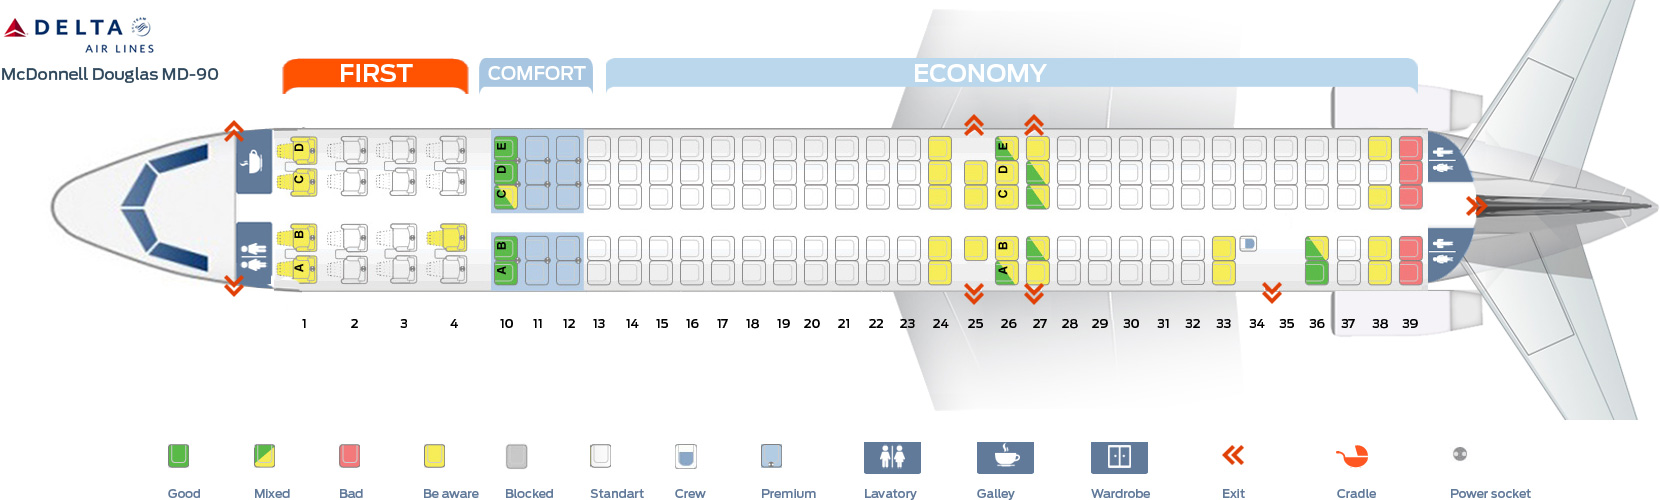 Seat map McDonnell Douglas MD90 “Delta Airlines”. Best 